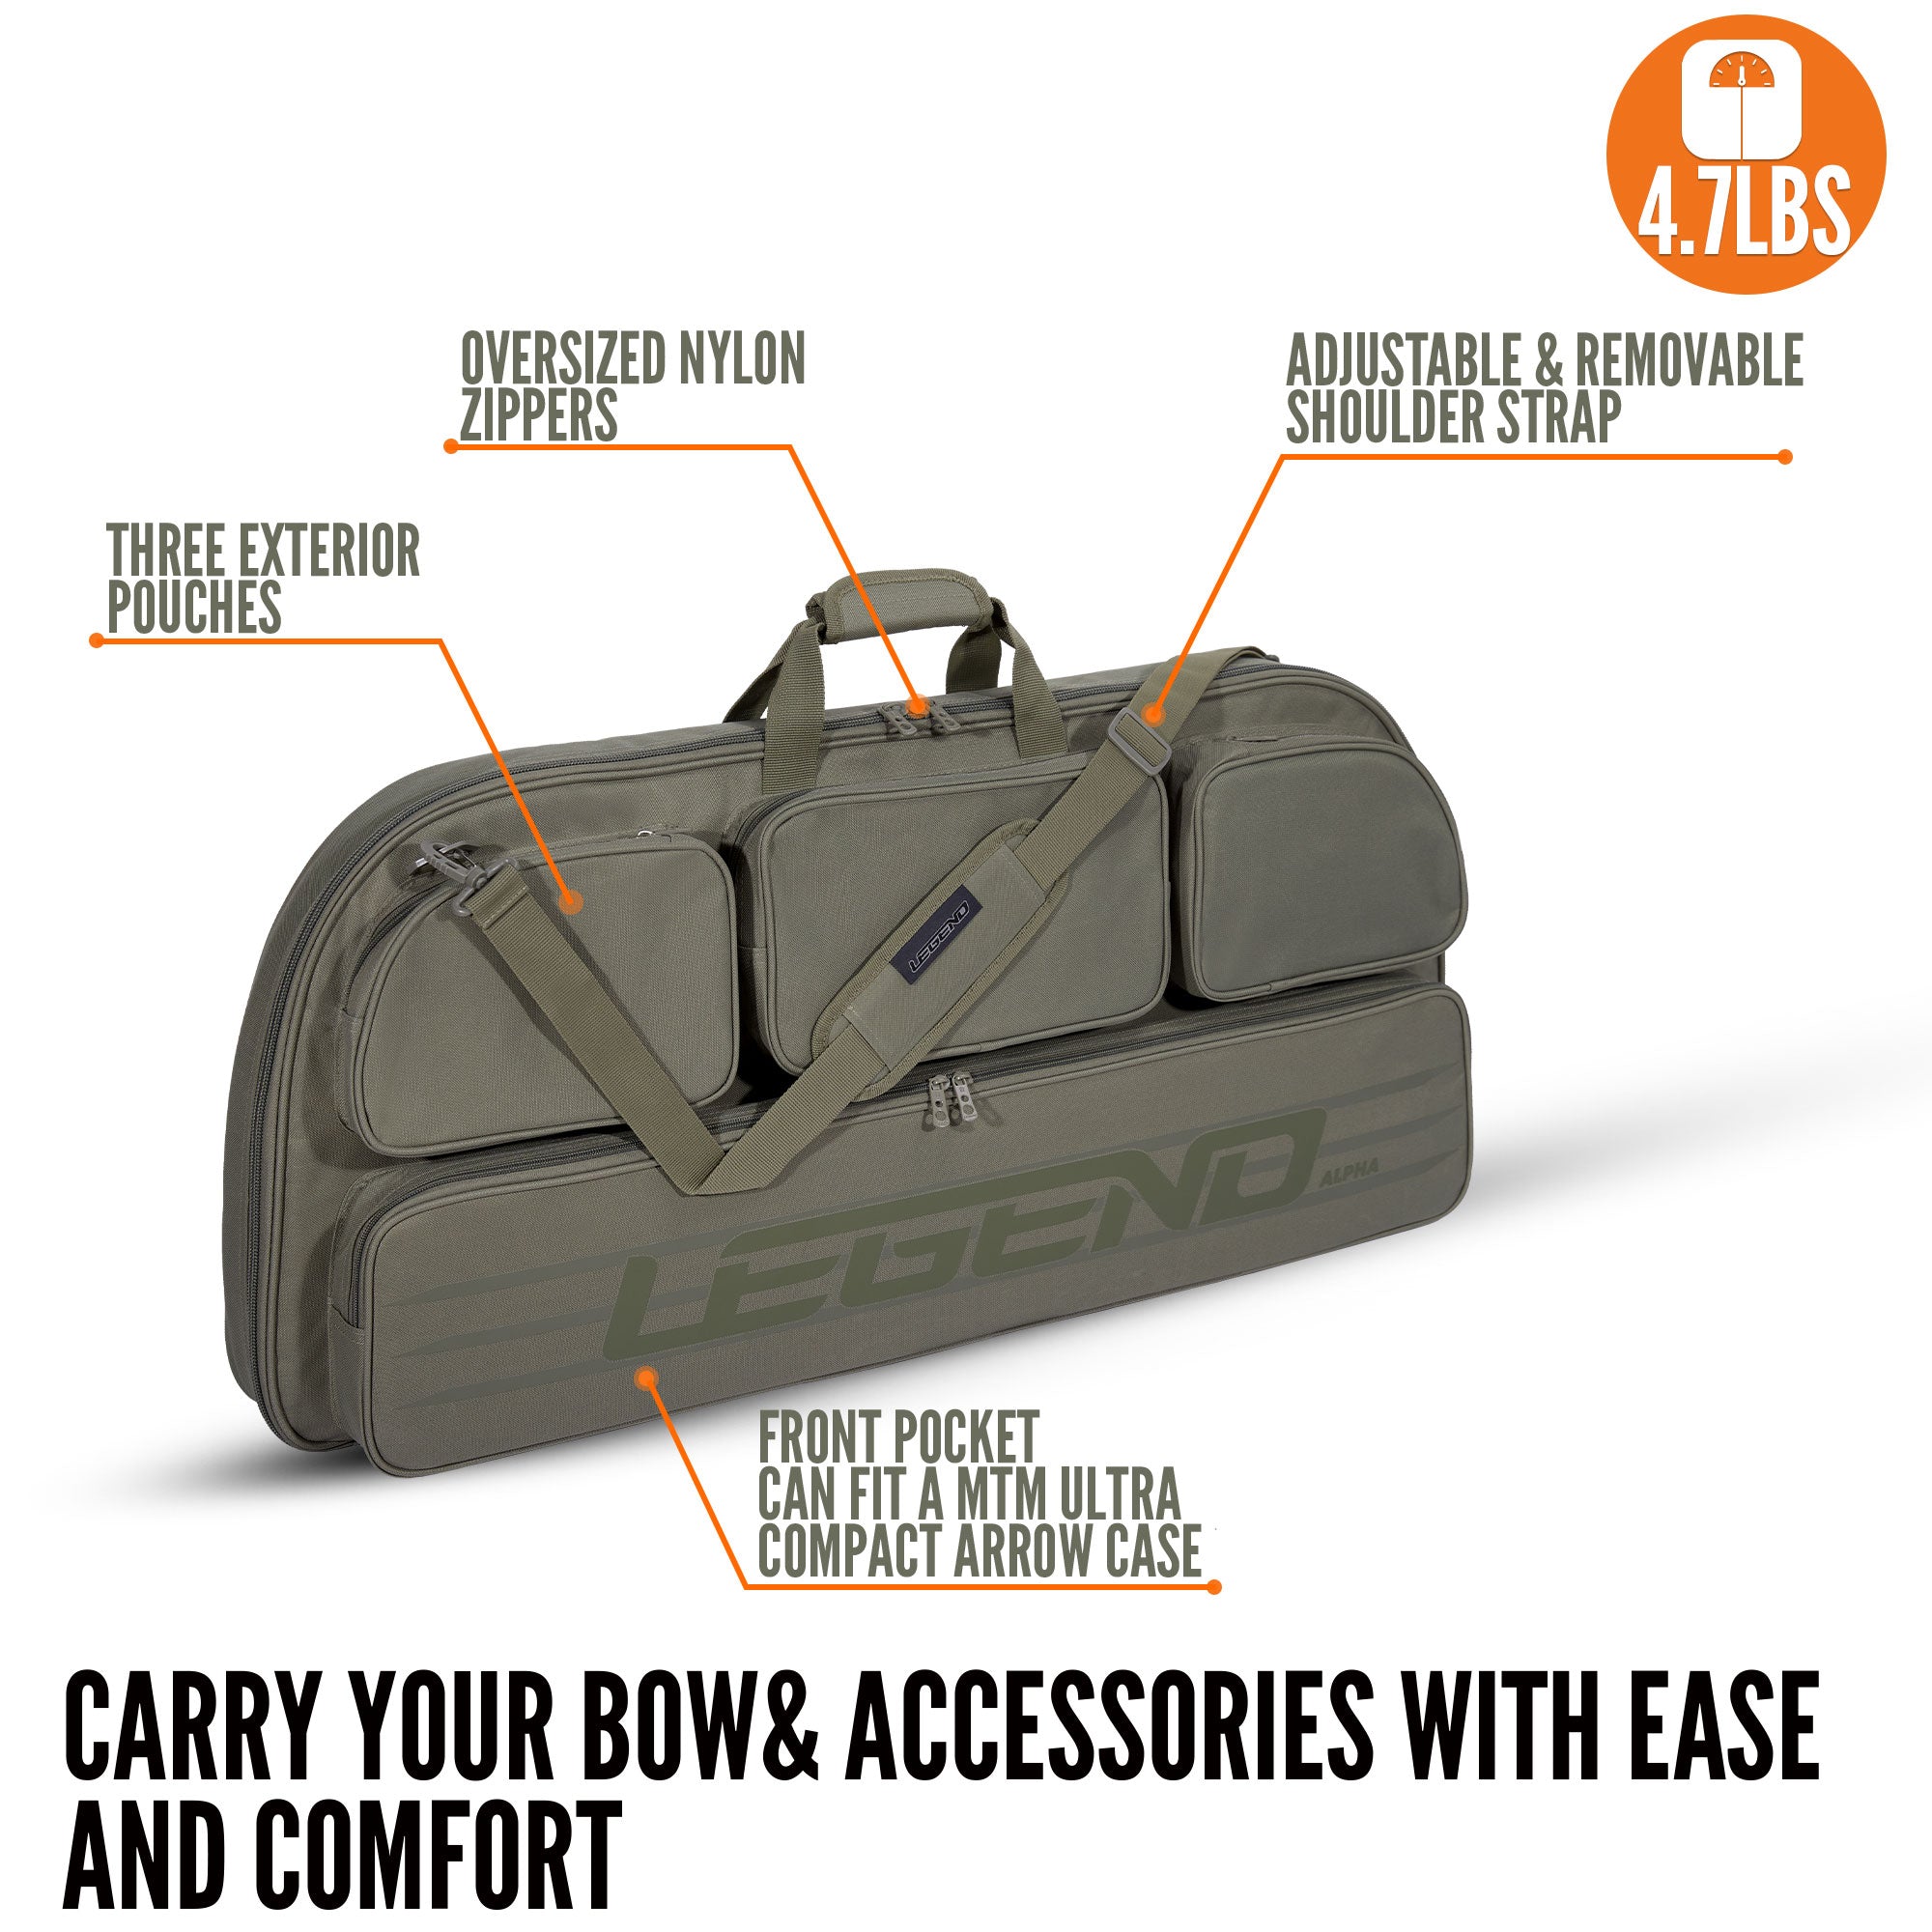 Legend Bow Case Fastening Straps Set of 6 - Moving Straps for Compound Bow Soft Cases - Securing Straps for Soft Bow Case, Adult Unisex, Black